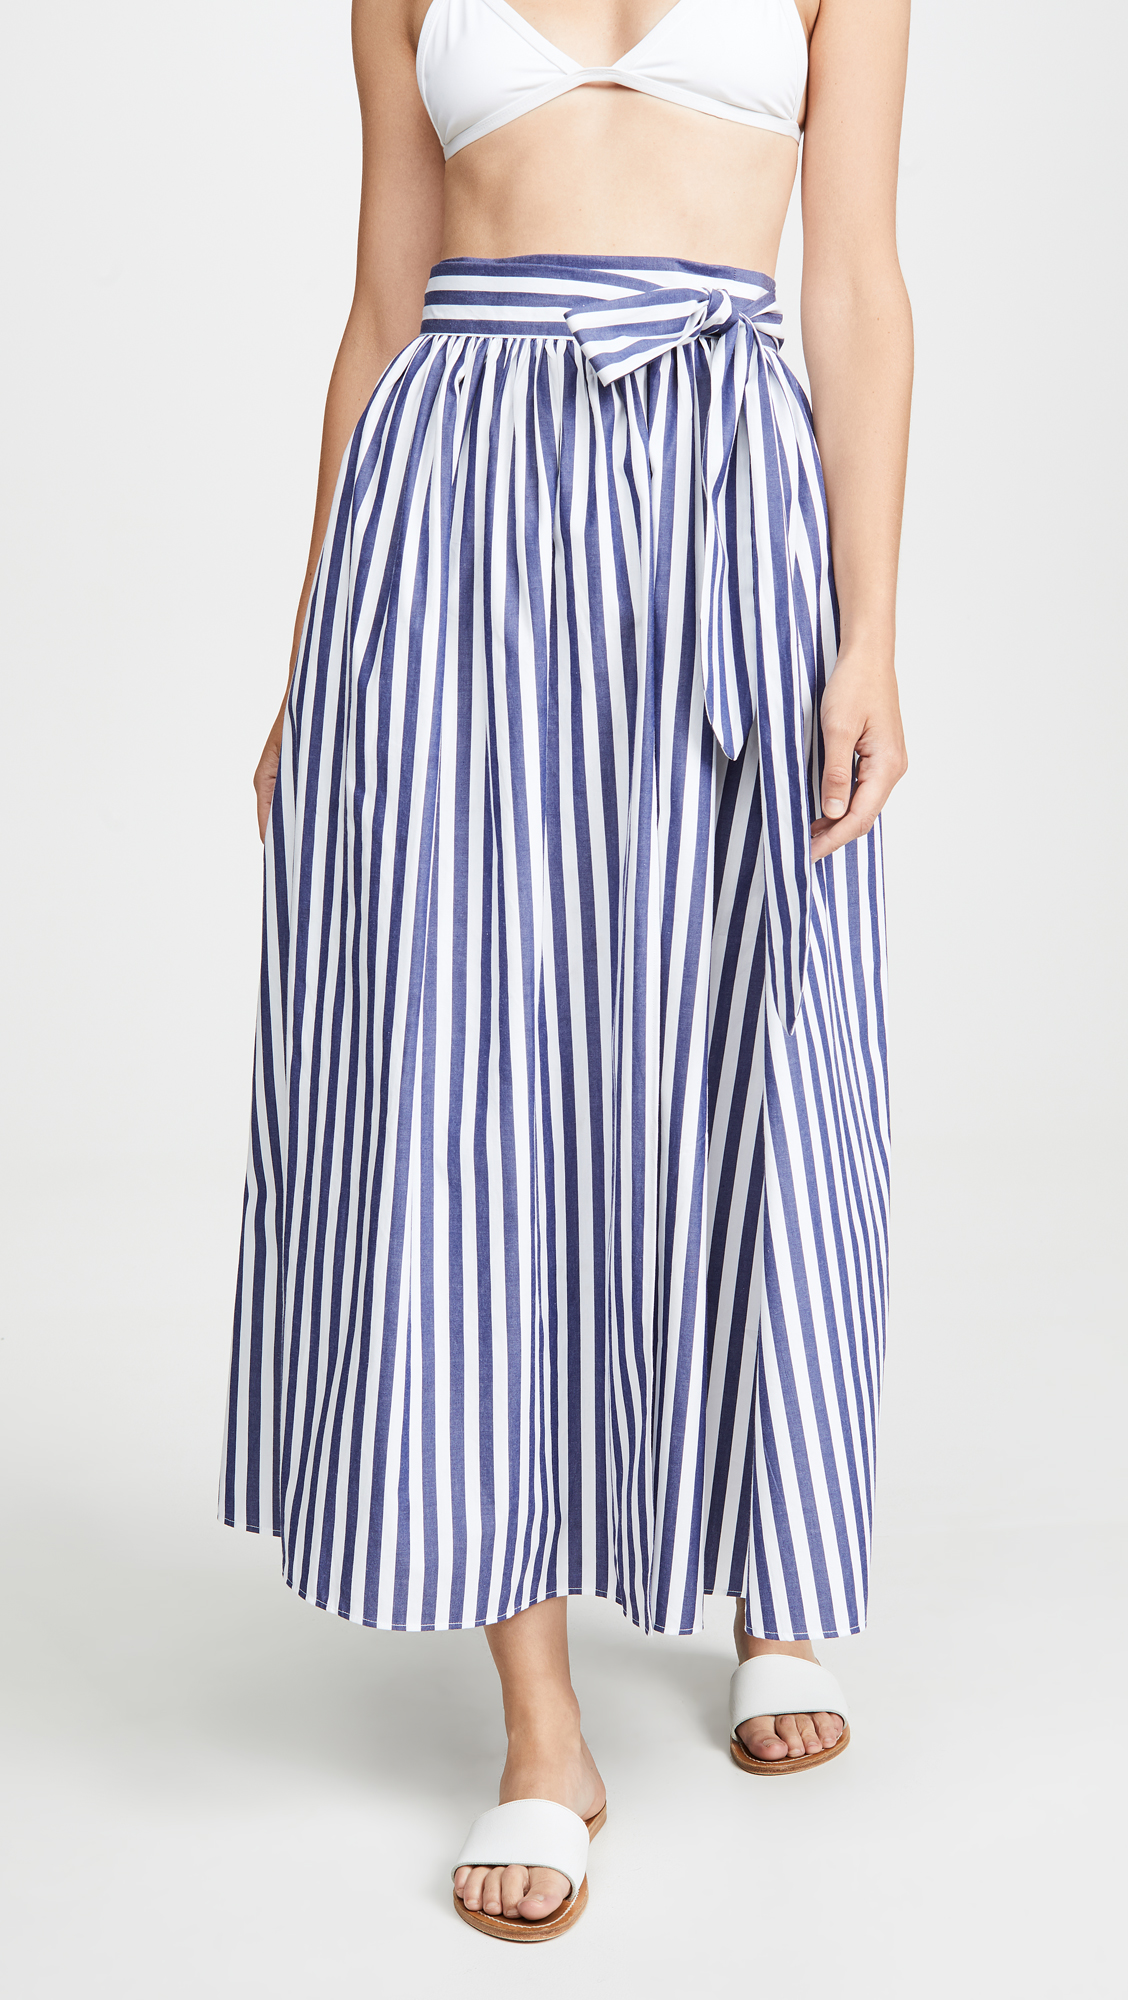 Striped Pattern Skirt